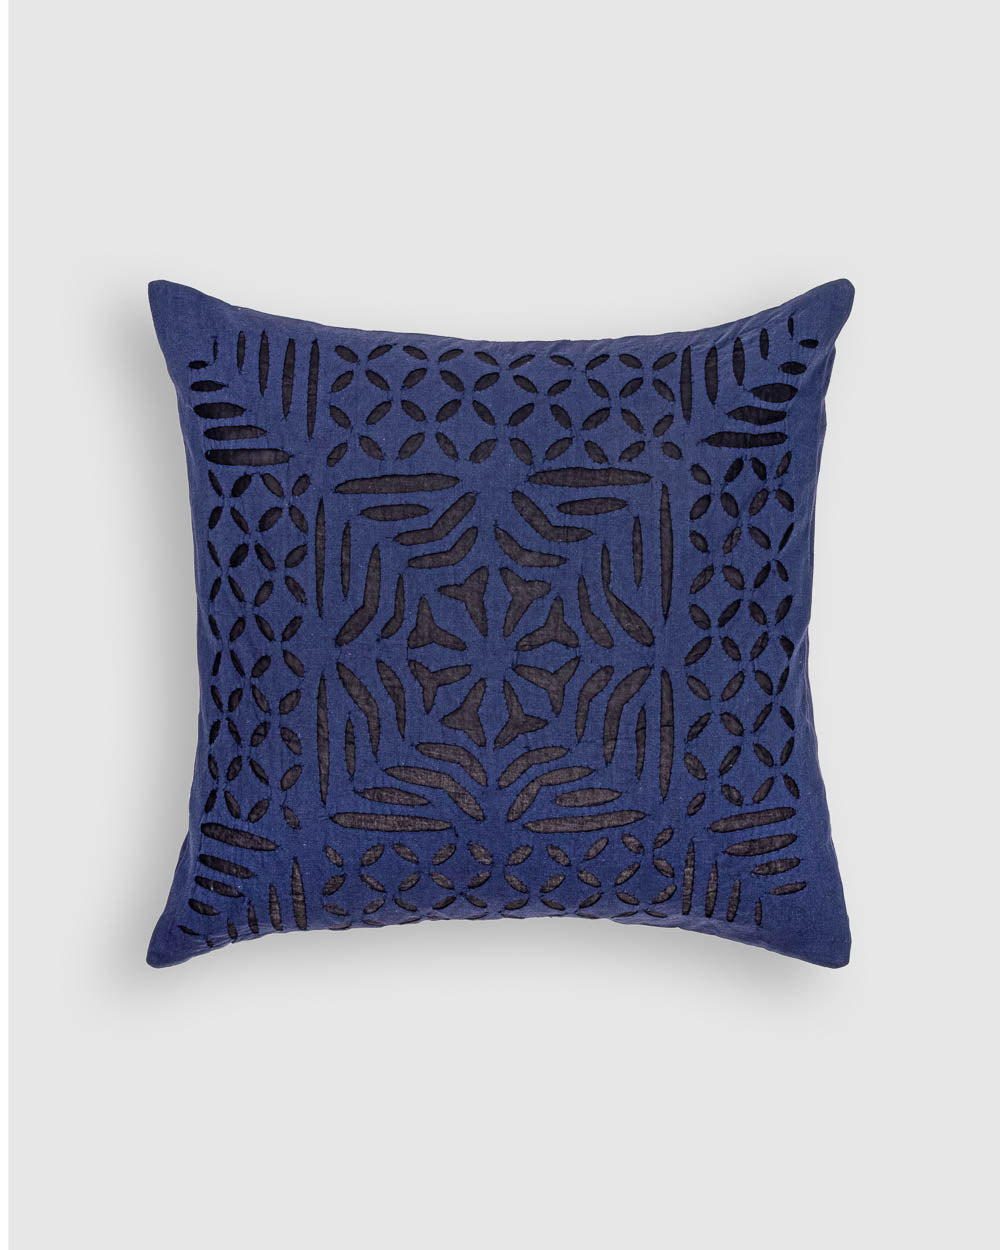 Cushion Cover Applique Gulchand Design, Navy Blue